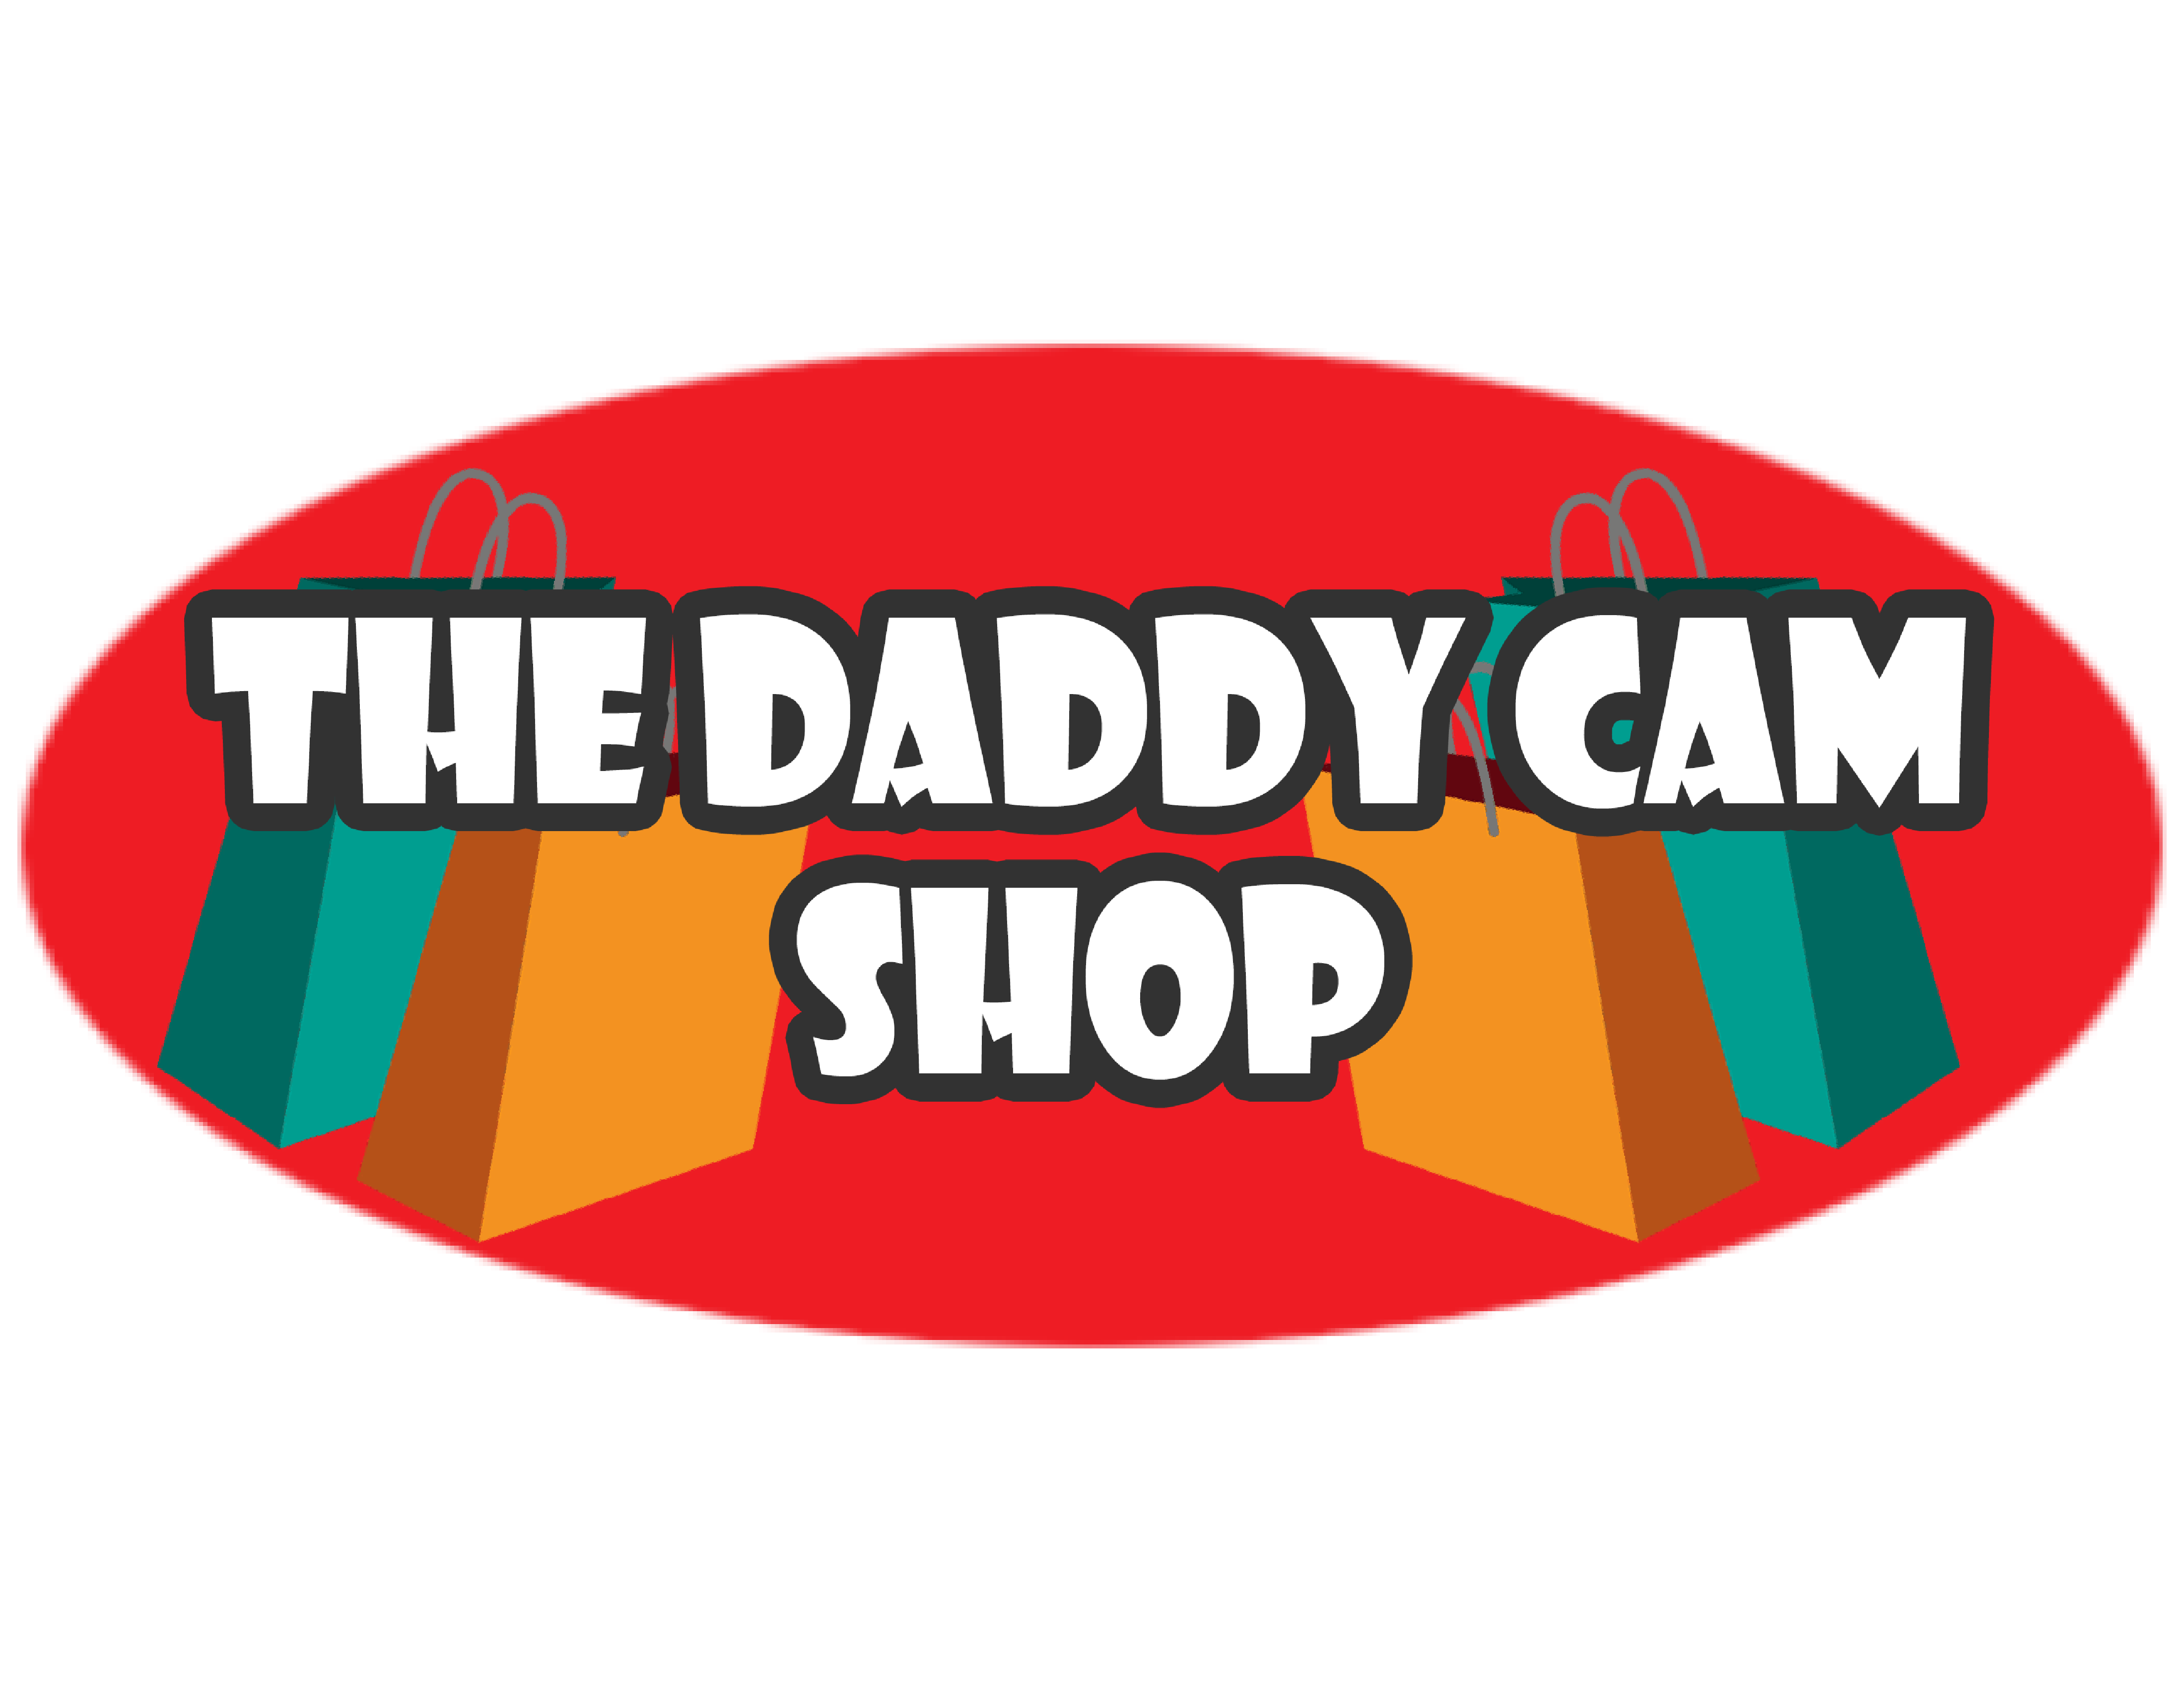 Daddy Webcams